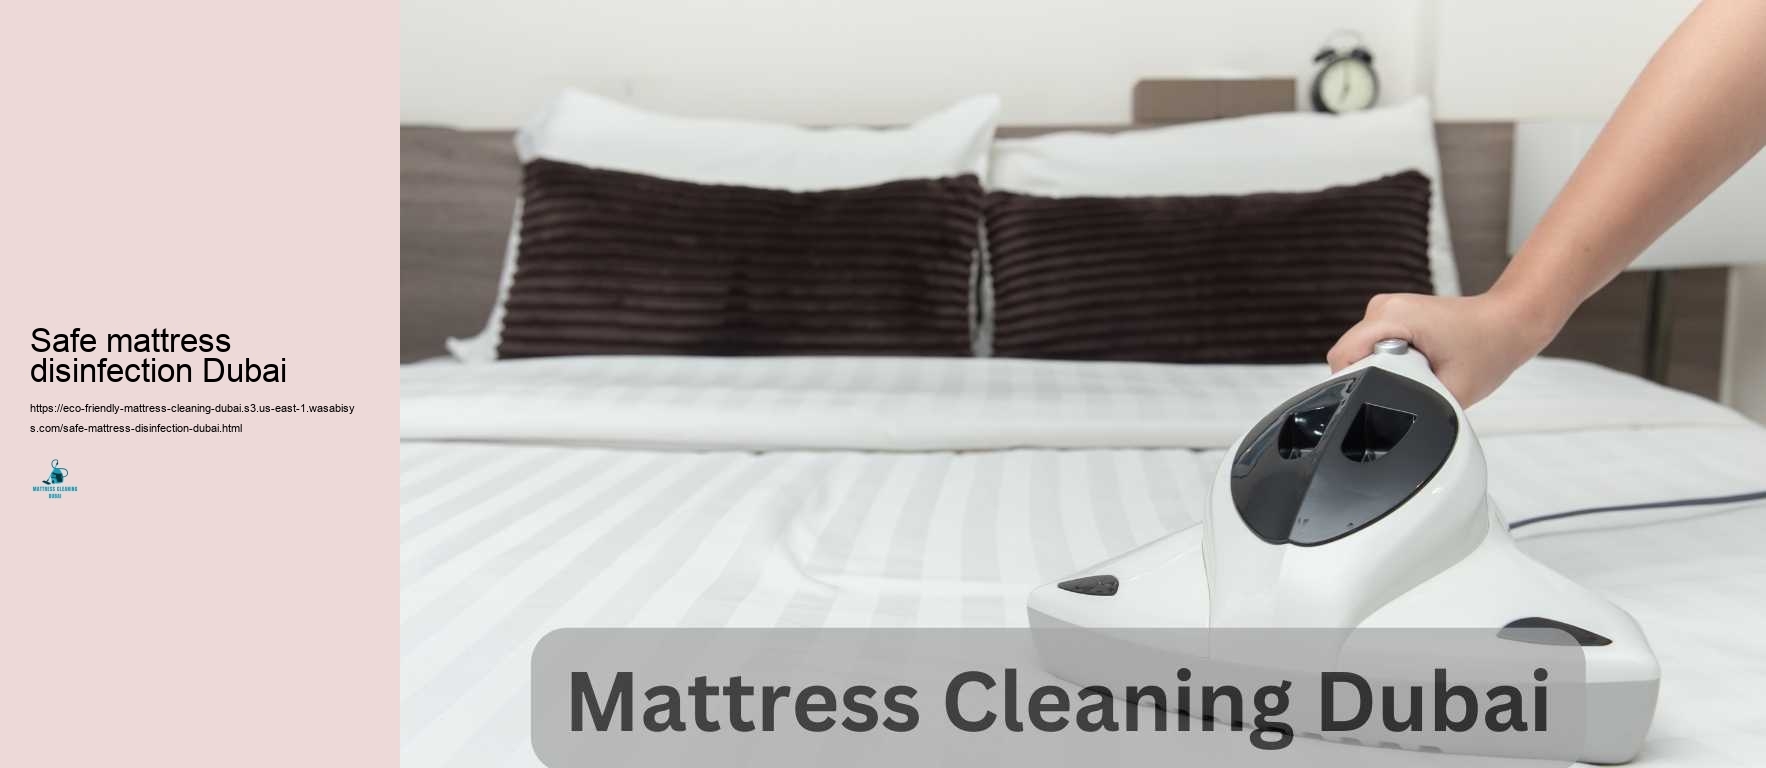 Safe mattress disinfection Dubai